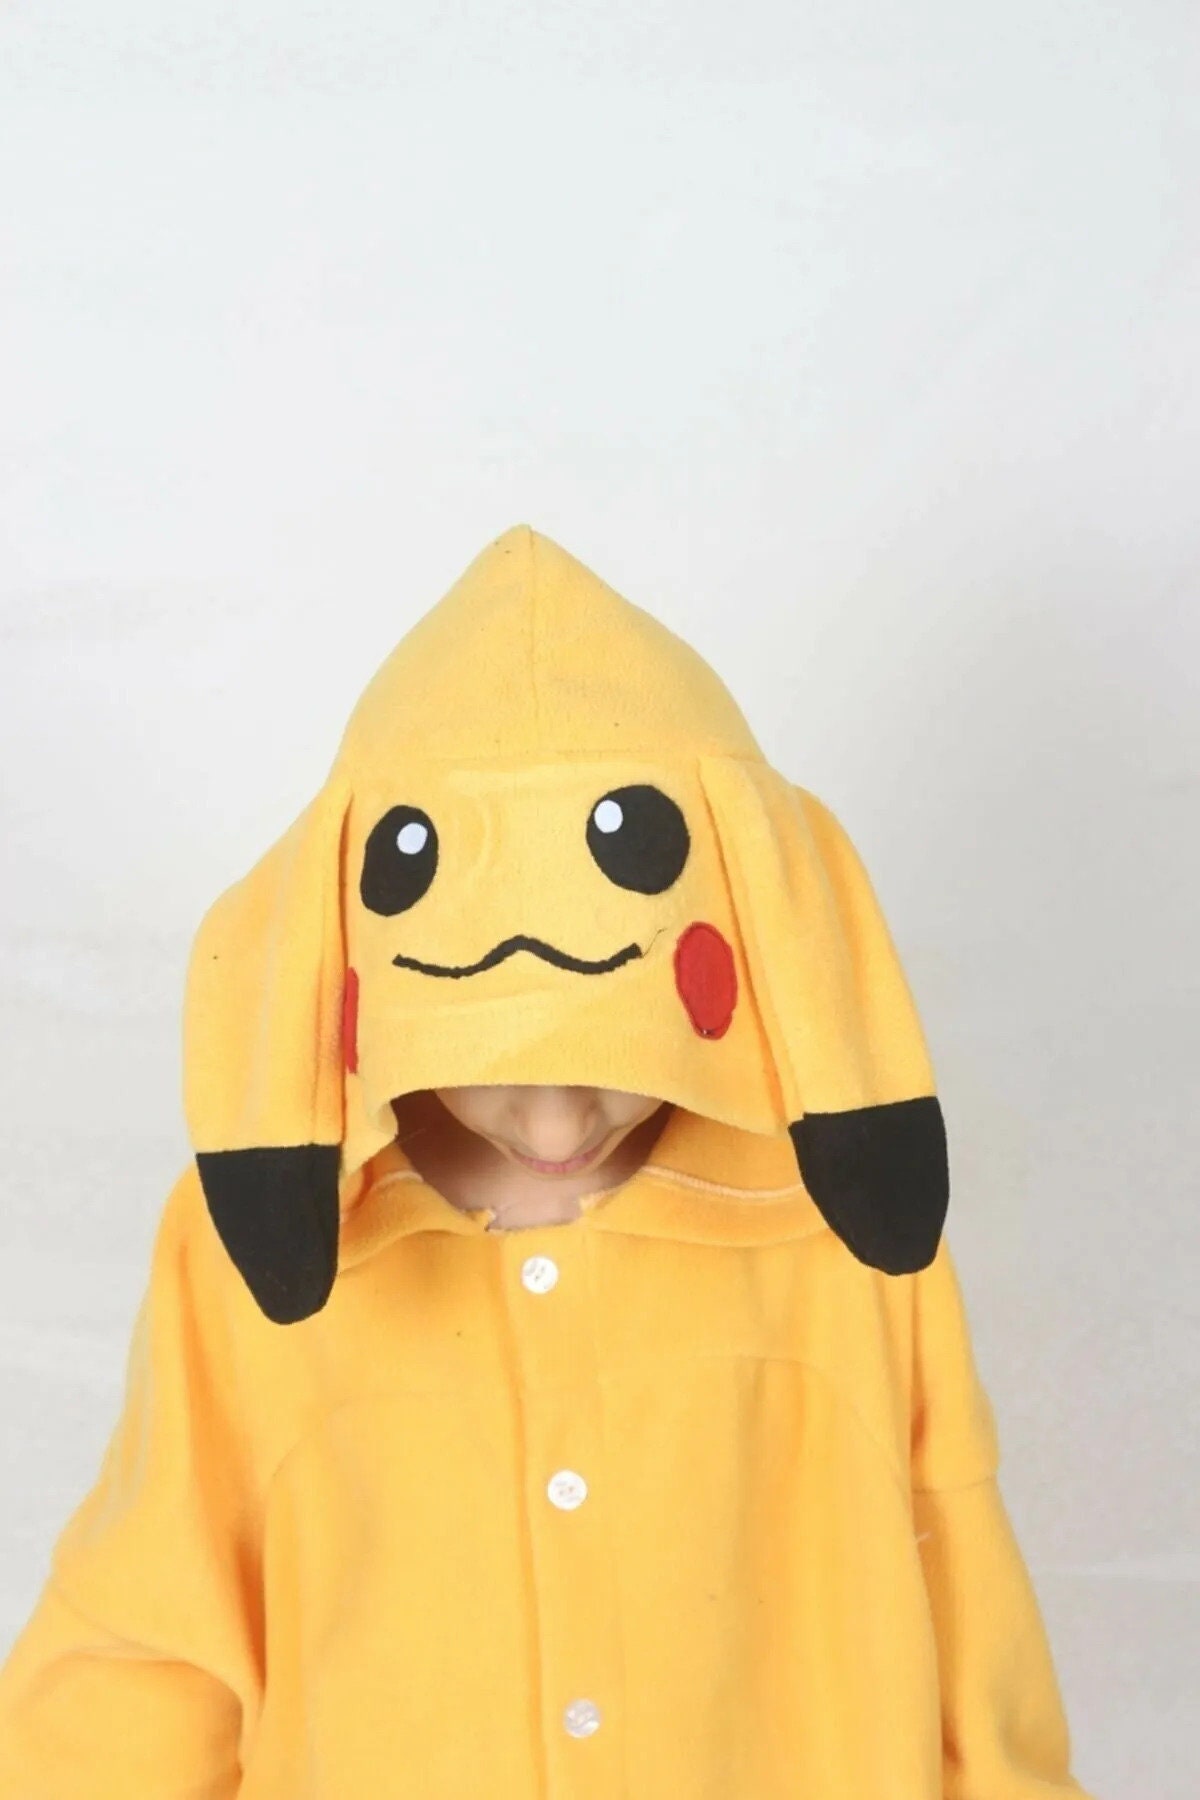 Pijama Kigurumi Fantasia Pikachu Amarelo Pokemon Adulto P, Produto  Masculino Kigurumi Usado 91301513